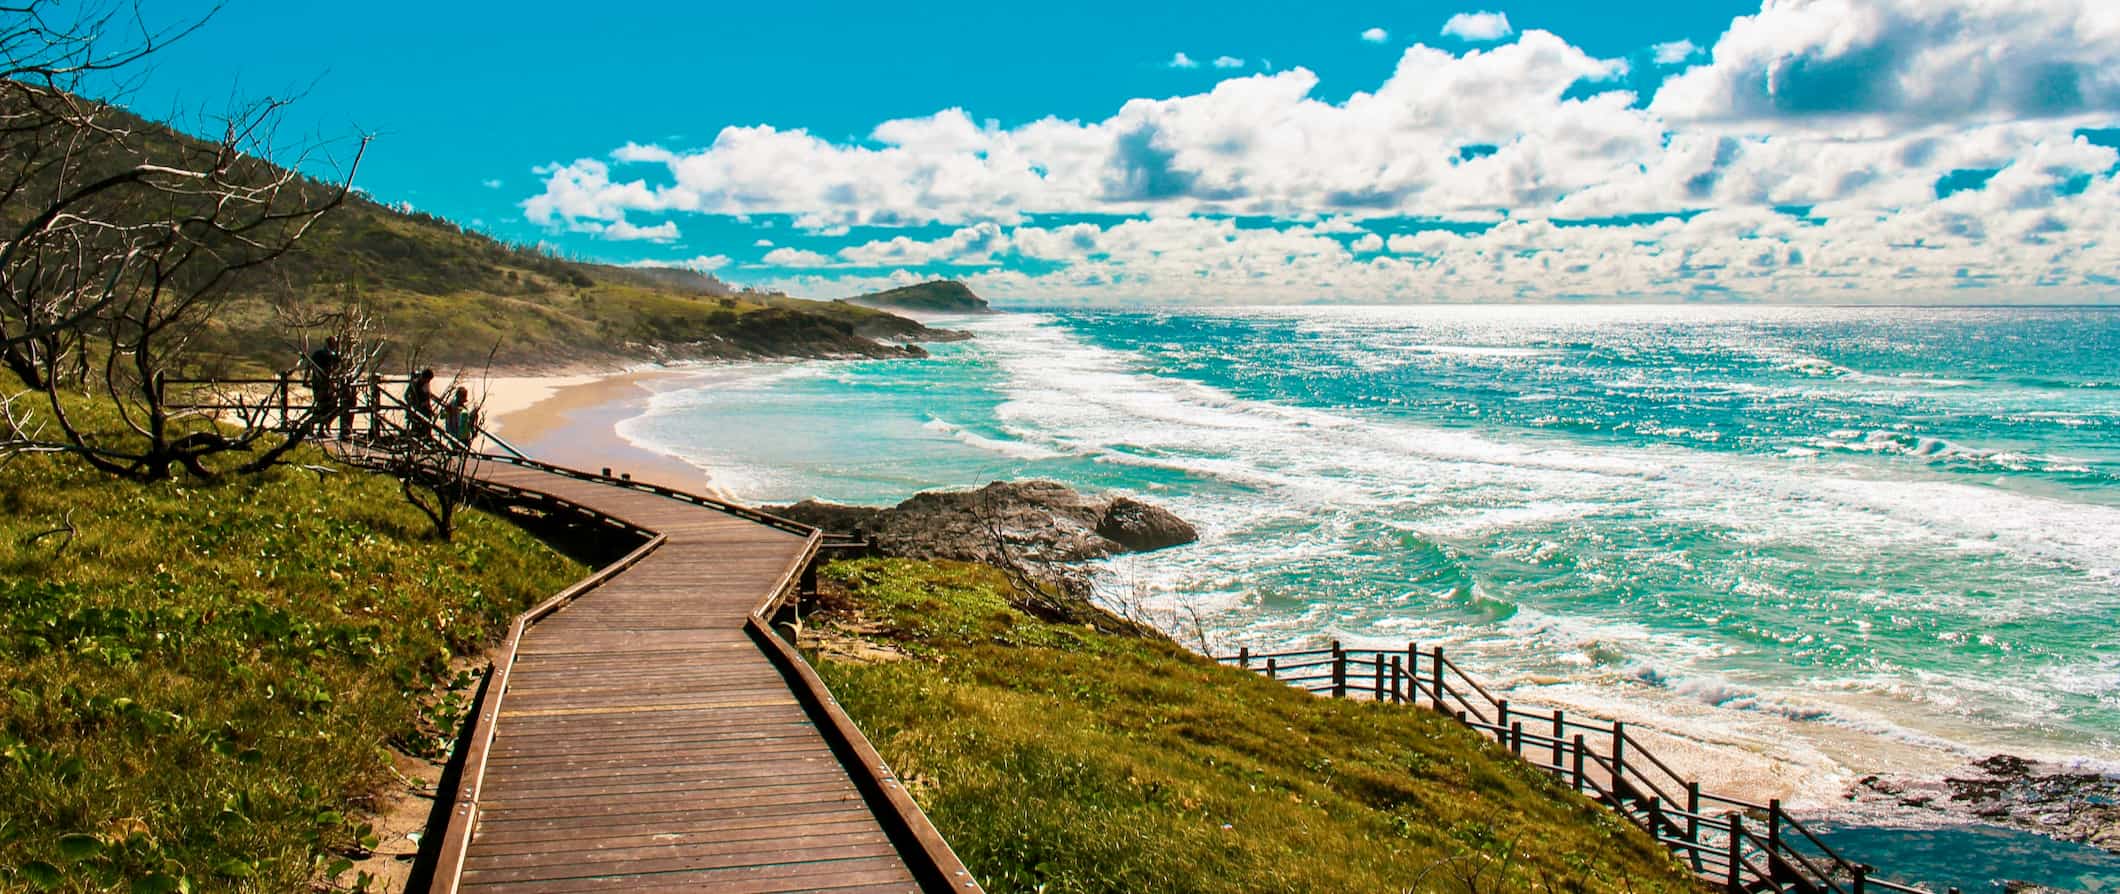 A wooden beach path that follows the stunning coast of tropical Fraser Island in Australia